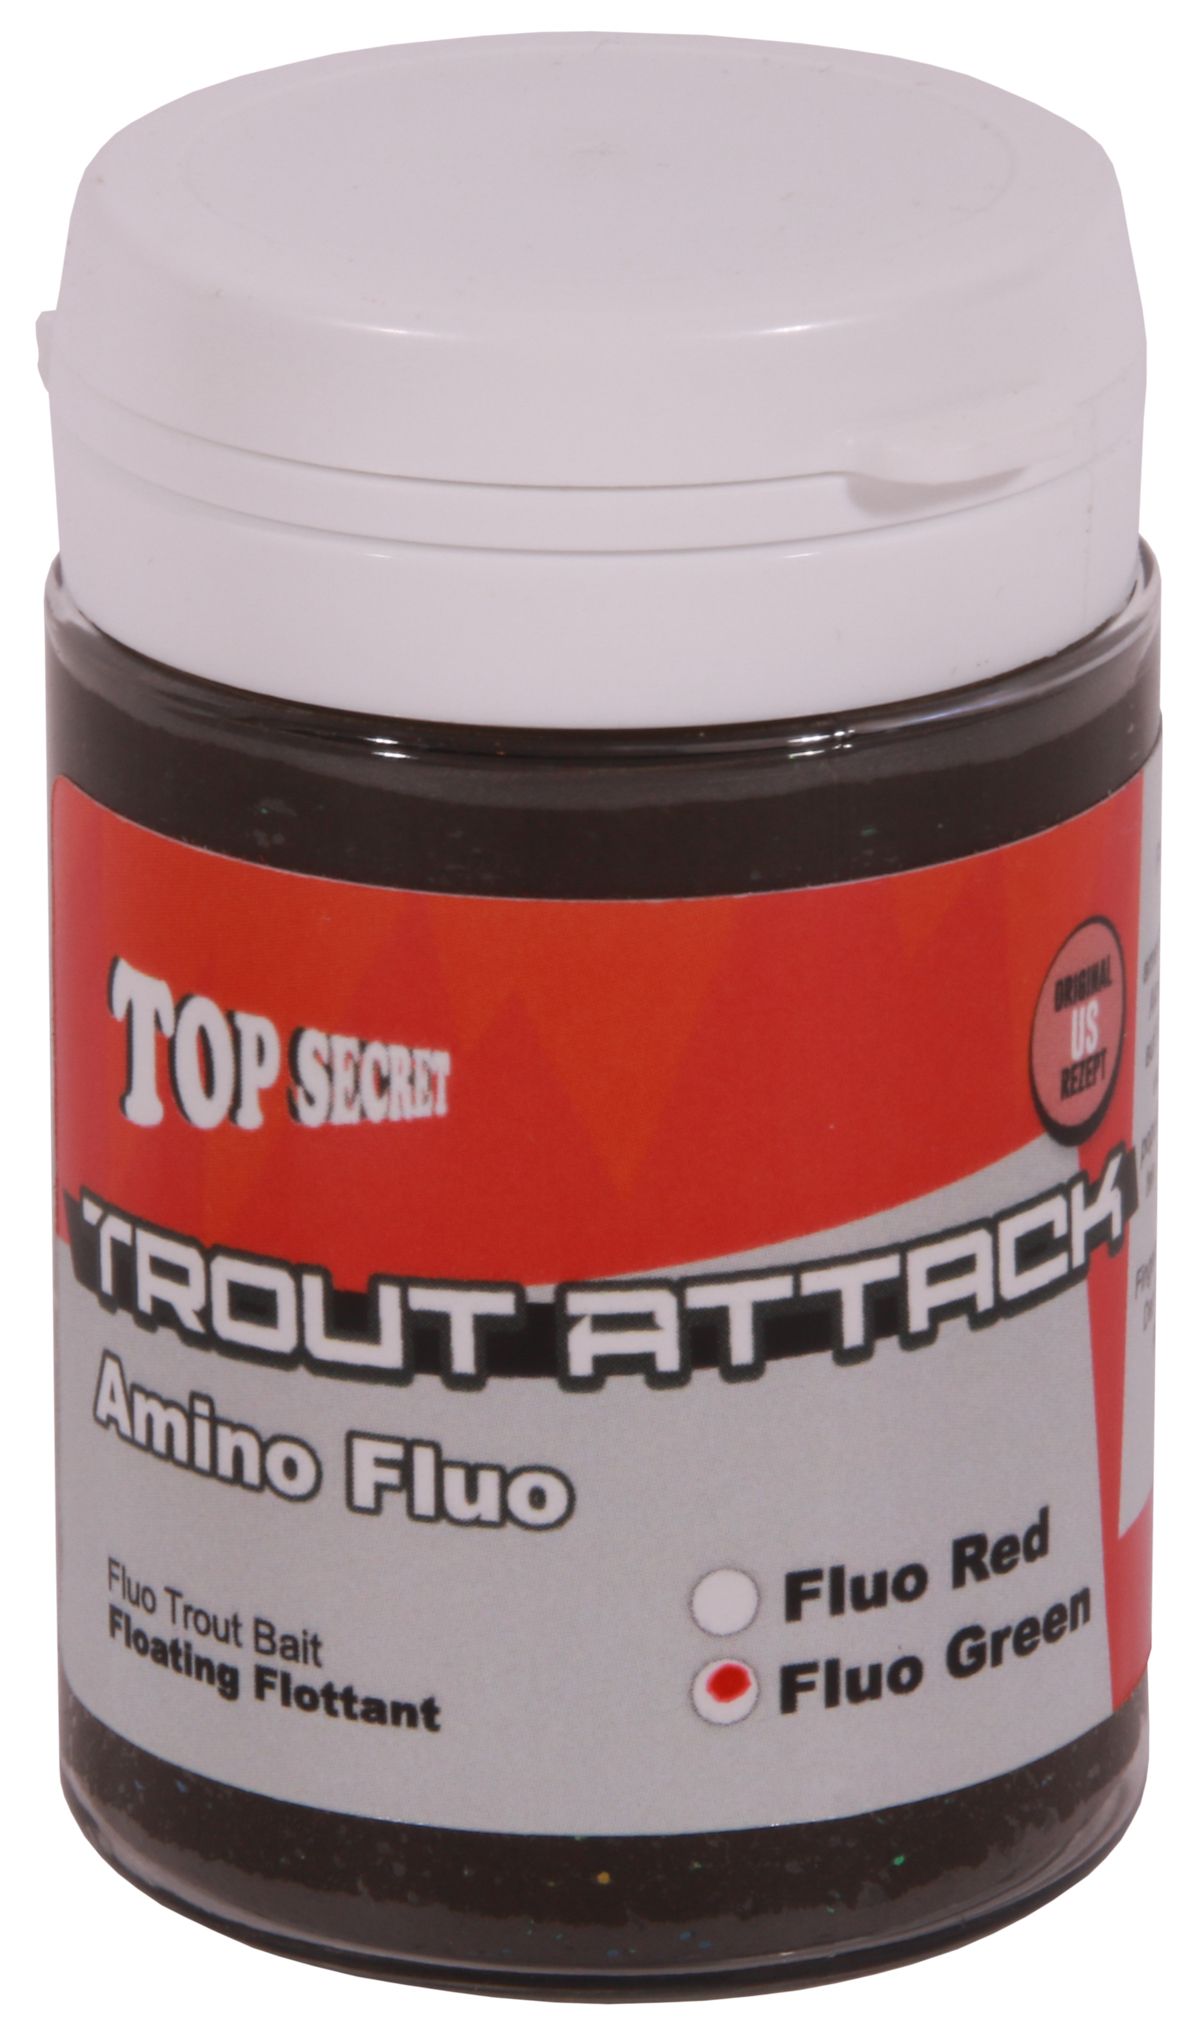 Top Secret Trout Attac Fluo 60g - Black Green